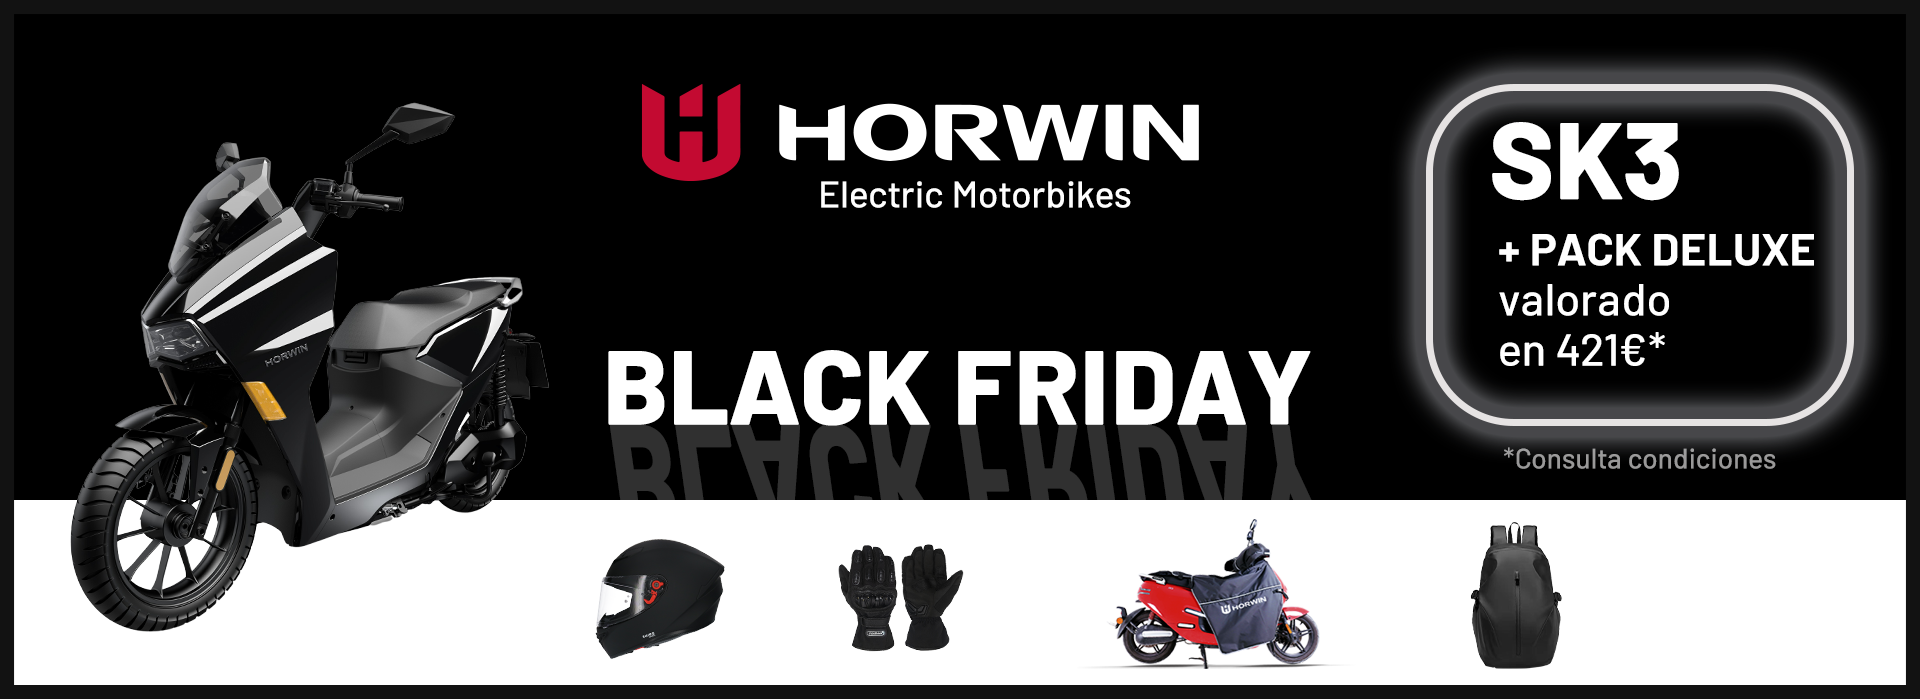 Horwin motos eléctricas - Black Friday - SK3 + PACK DELUXE